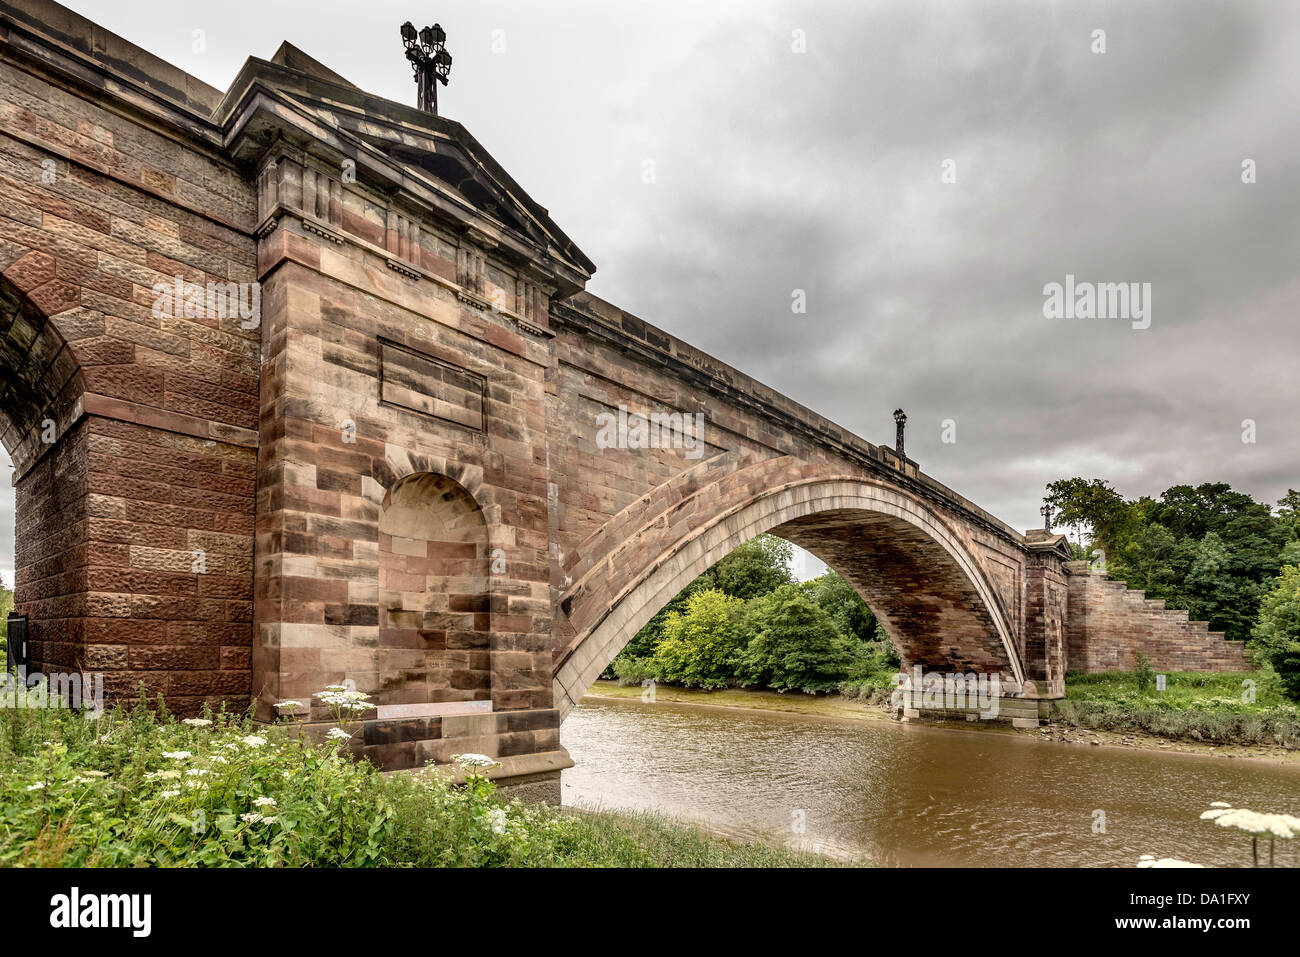 The Grosvenor Bridge, a single-span stone arch road bridge crossing the River Dee at Chester, England. Stock Photo